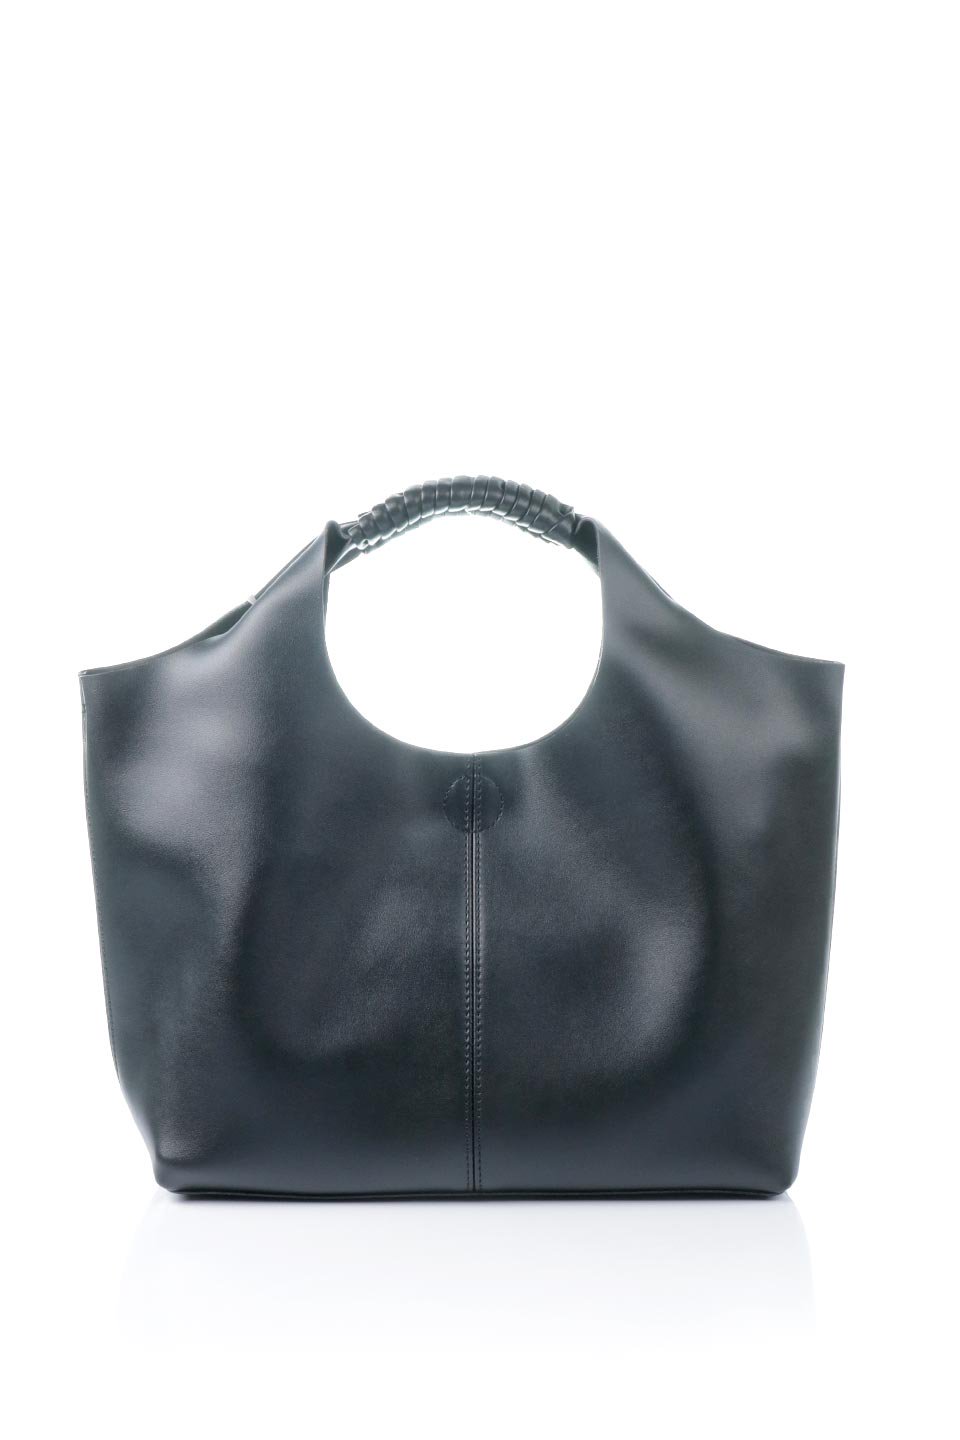 meliebiancoのLinda(Black)プレミアムビーガンレザー・トートバッグ/海外ファッション好きにオススメのインポートバッグとかばん、MelieBianco（メリービアンコ）のバッグやトートバッグ。なめらかなプレミアムビーガンレザーを使用したスタイリッシュなトートバッグ。大小2つのポーチと、両手を使いたい時に便利なショルダーストラップ付き。